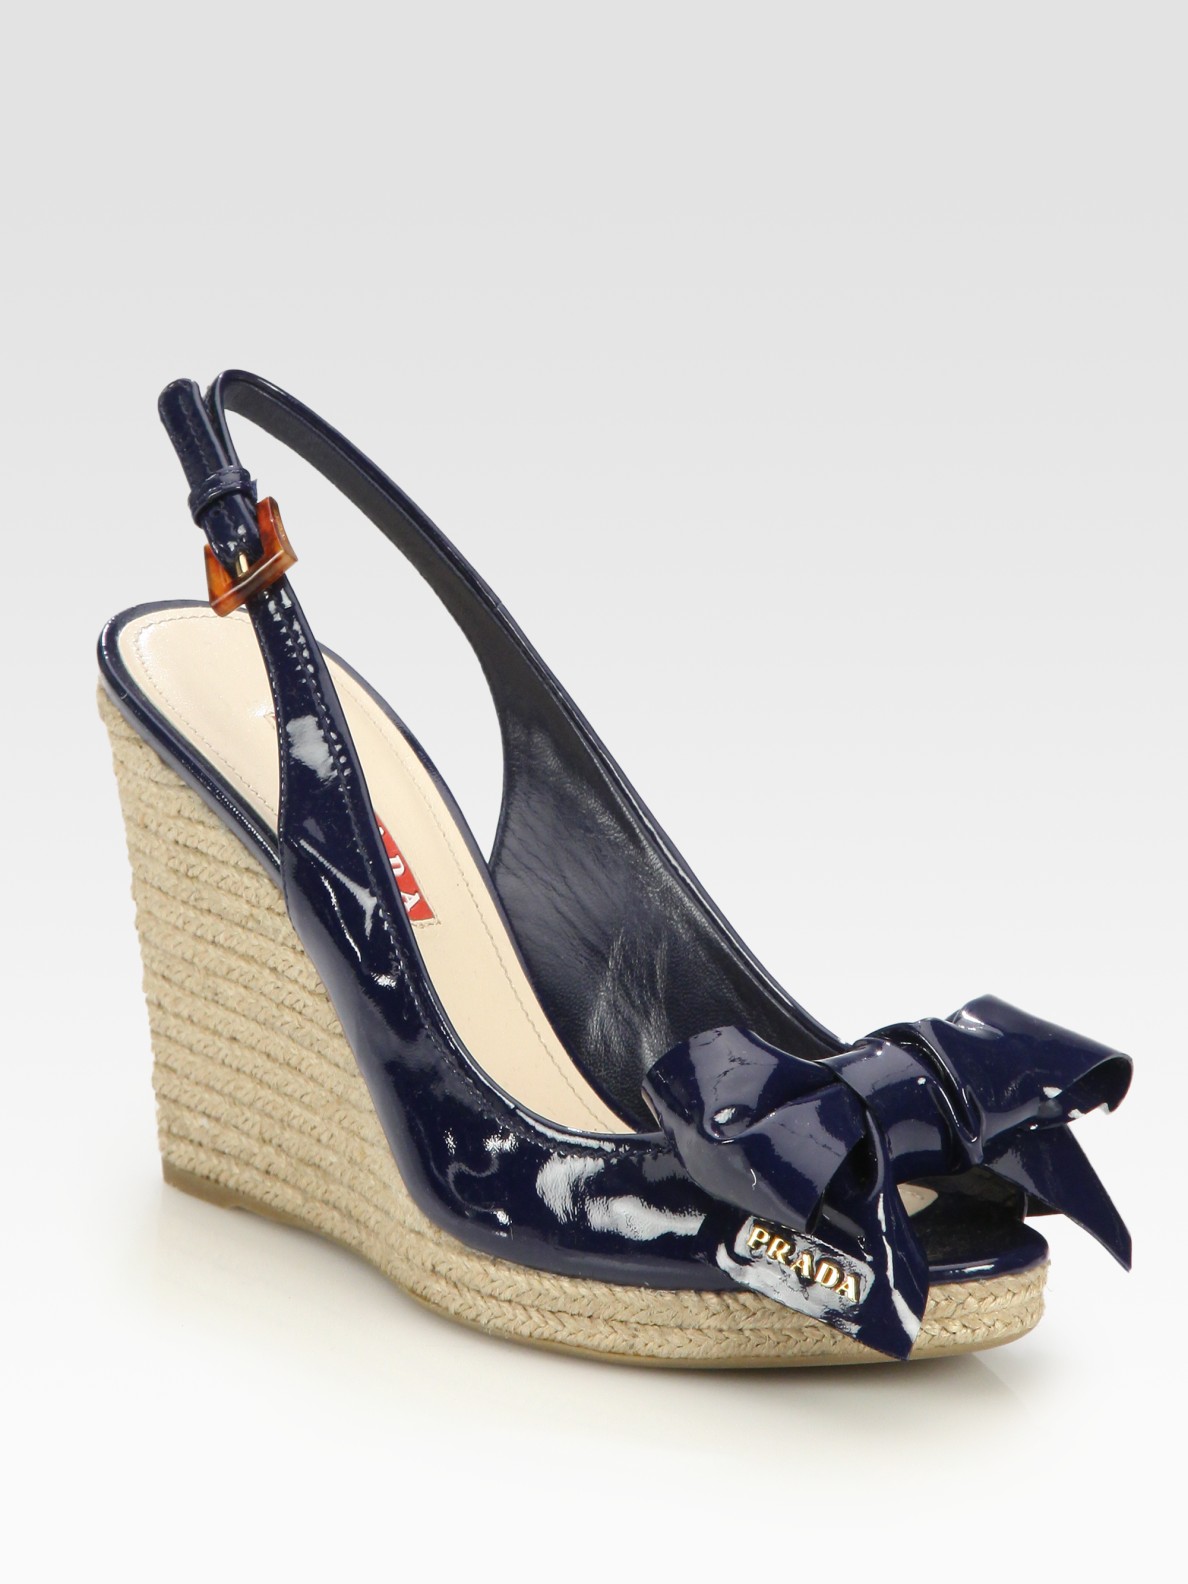 Lyst - Prada Espadrille Wedge Sandals in Blue